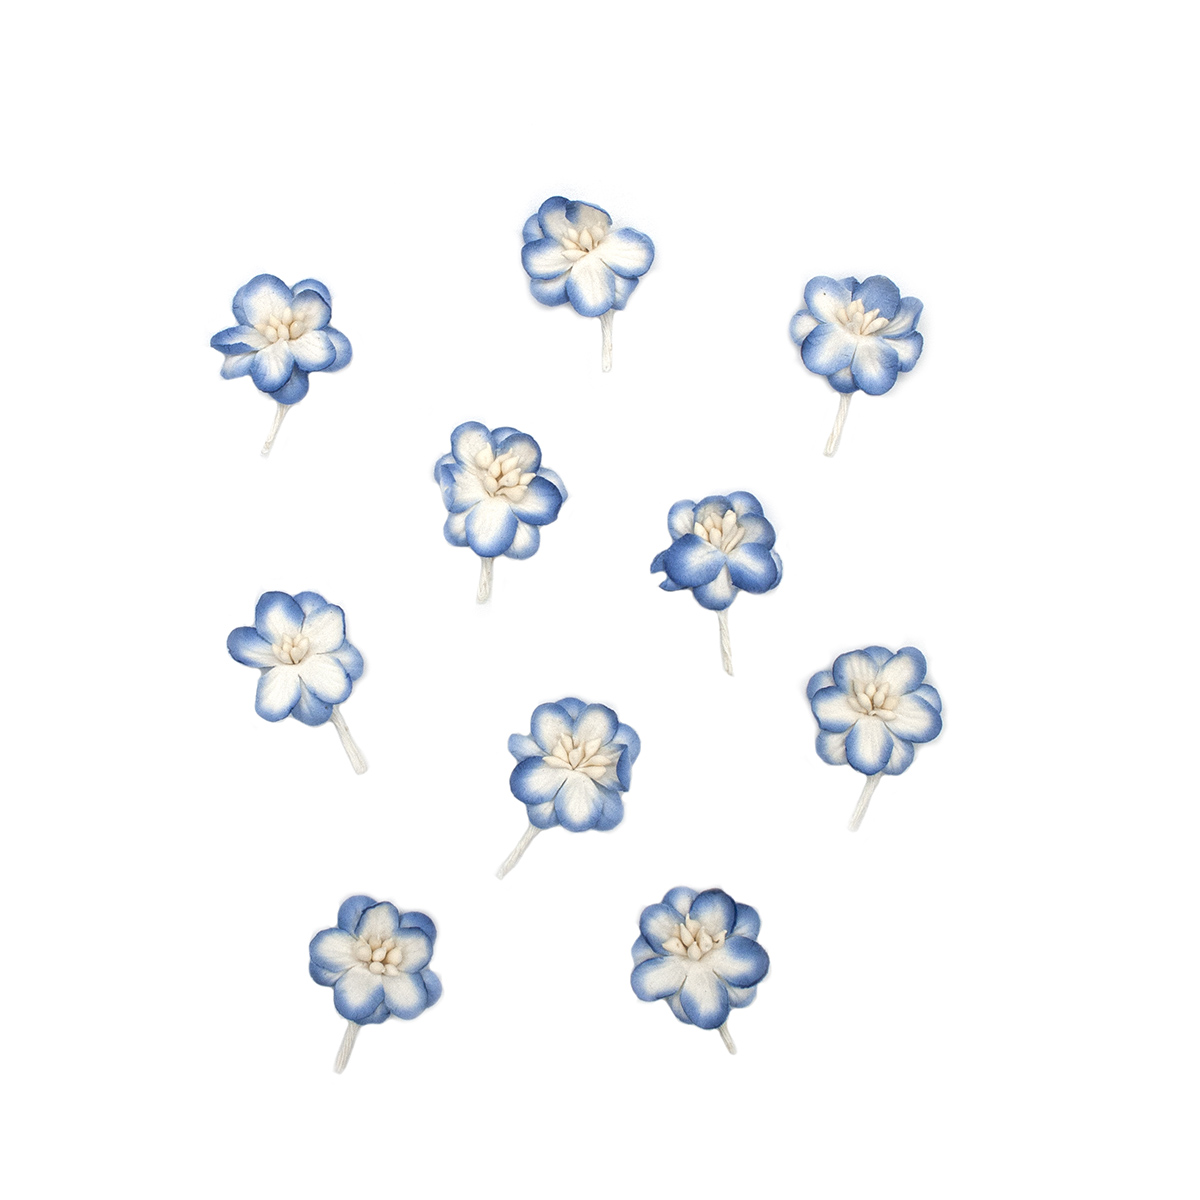 фото Scb3002 набор цветки вишни из бумаги, упак./10 шт. (15 белый/синий) scrapberry's